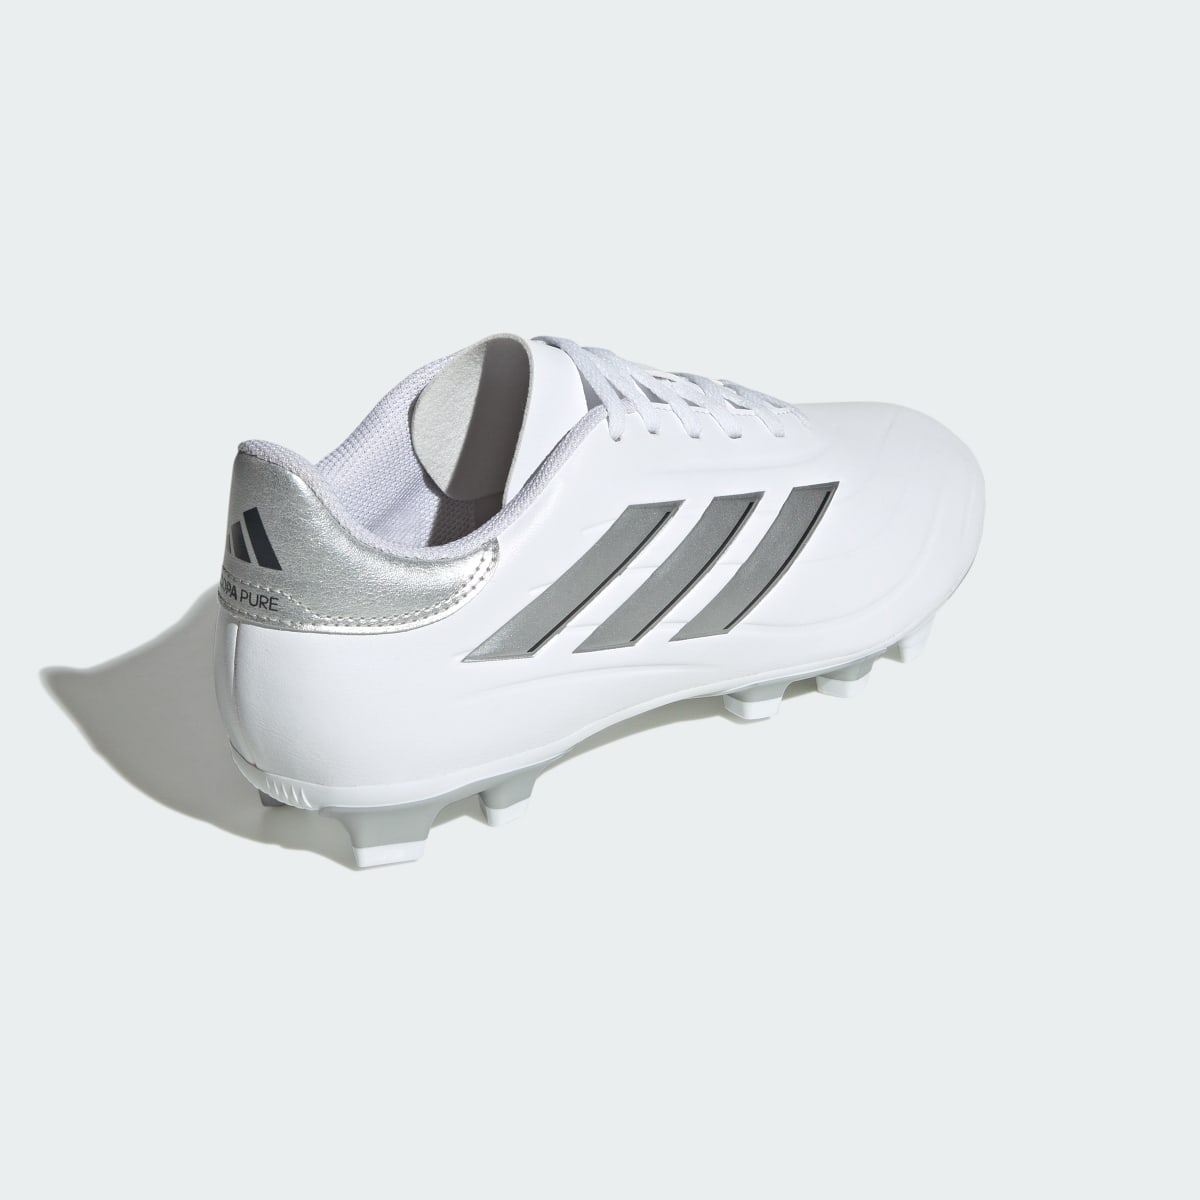 Adidas Copa Pure II Club Flexible Ground Boots. 6